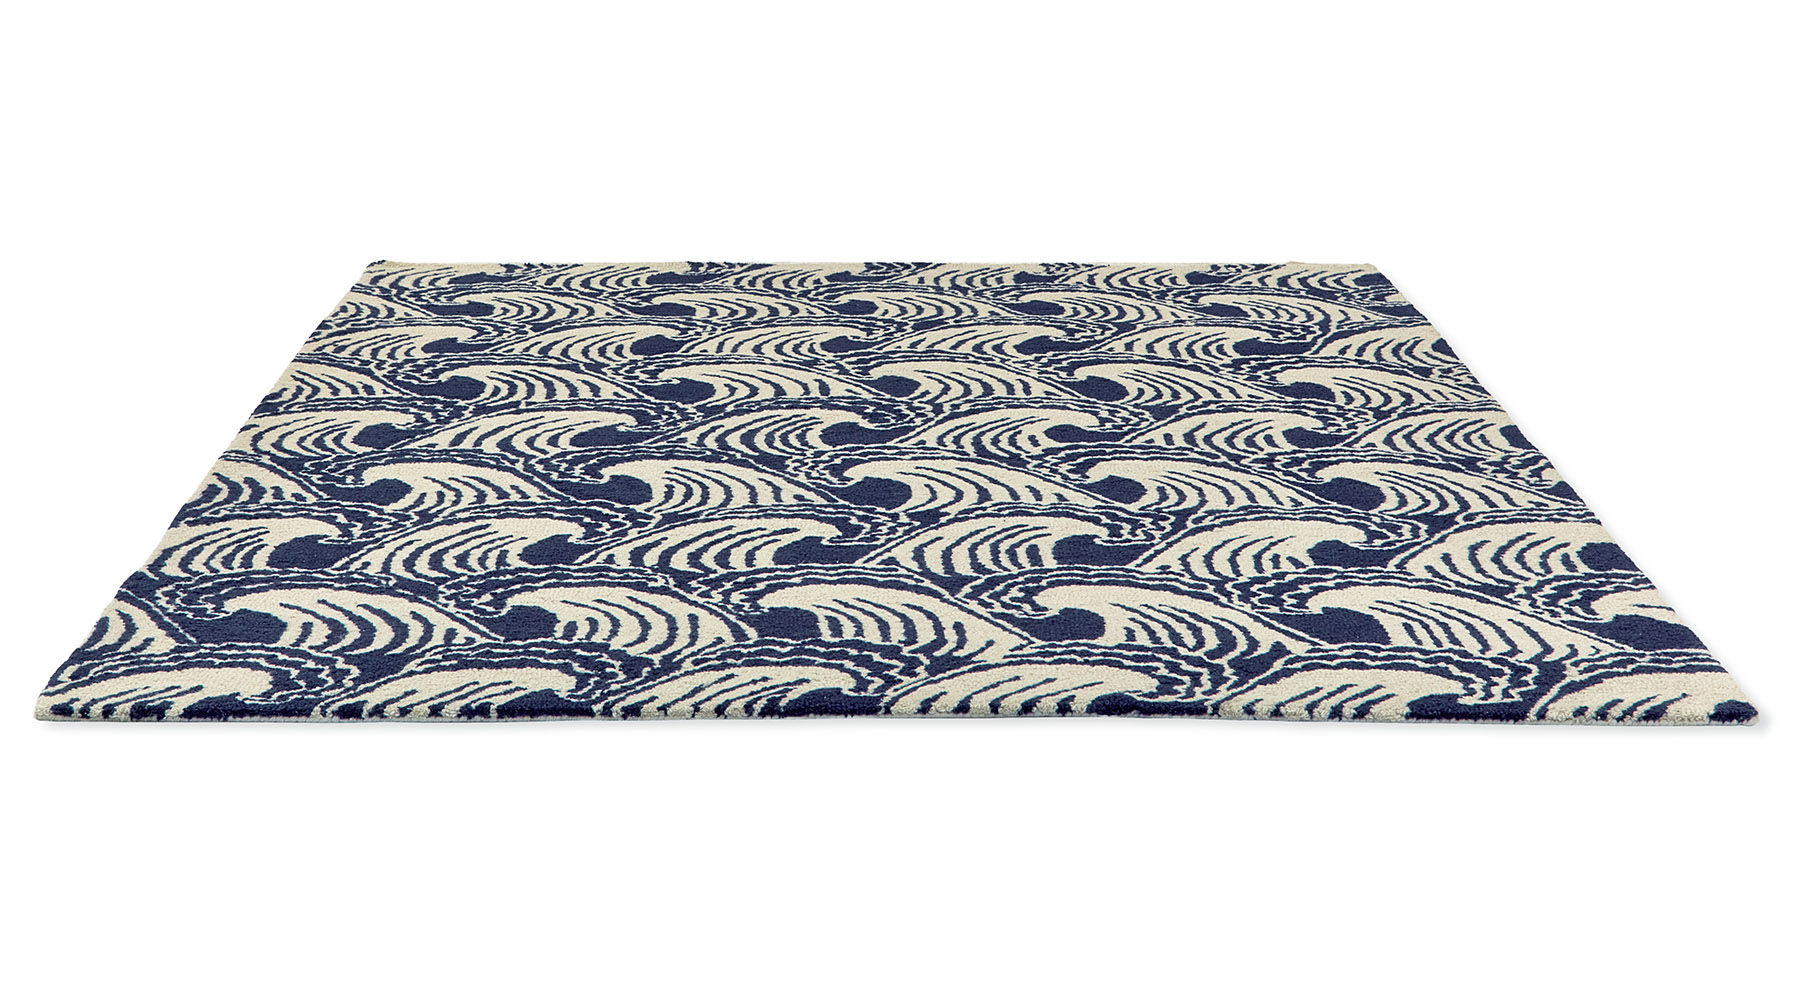 Waves Denim Rug ☞ Size: 4' x 6' (120 x 180 cm)